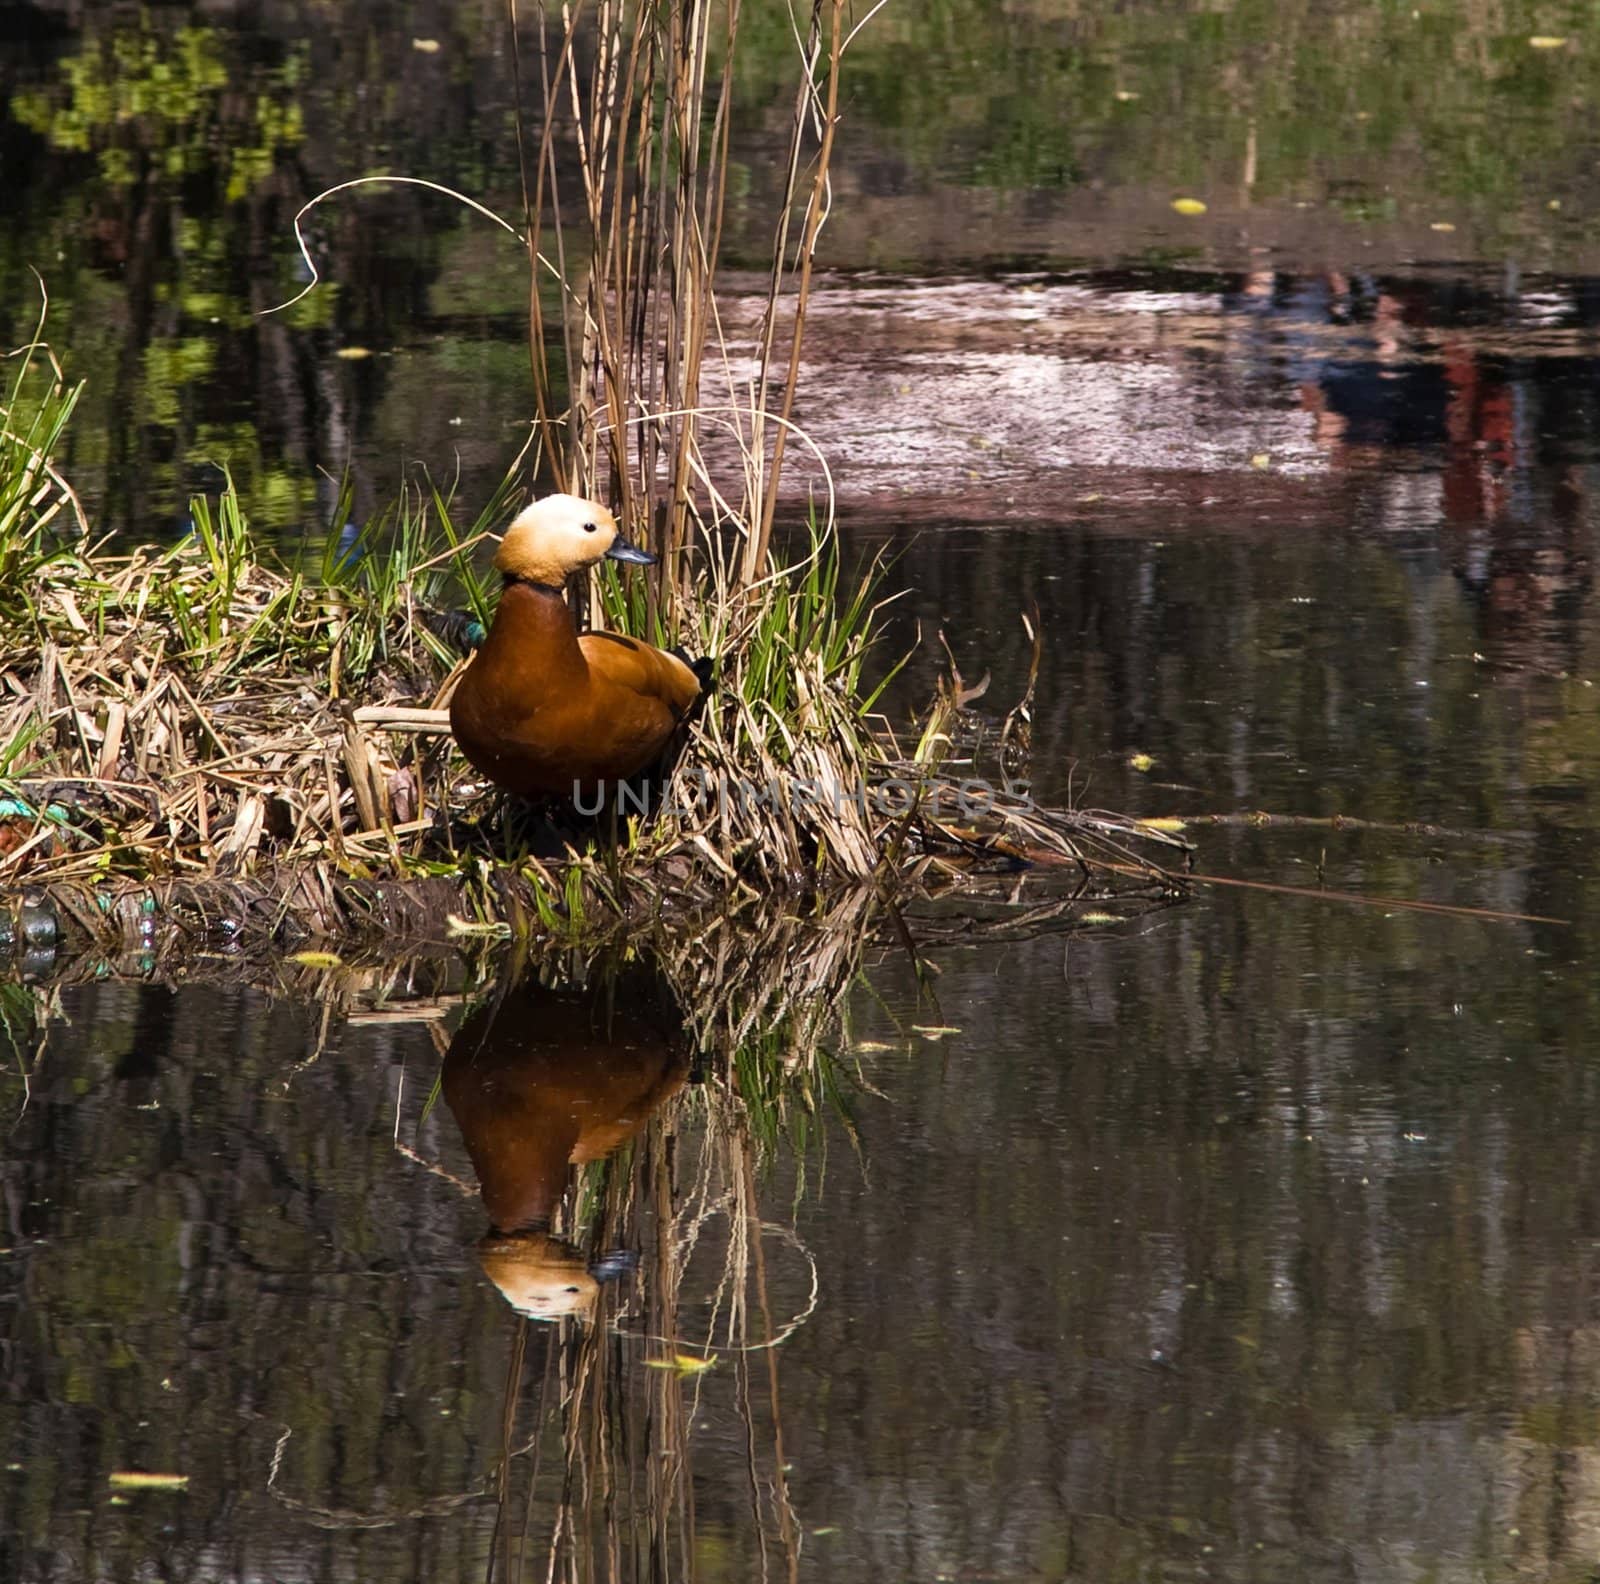 Orange duck reflected in water by lilsla